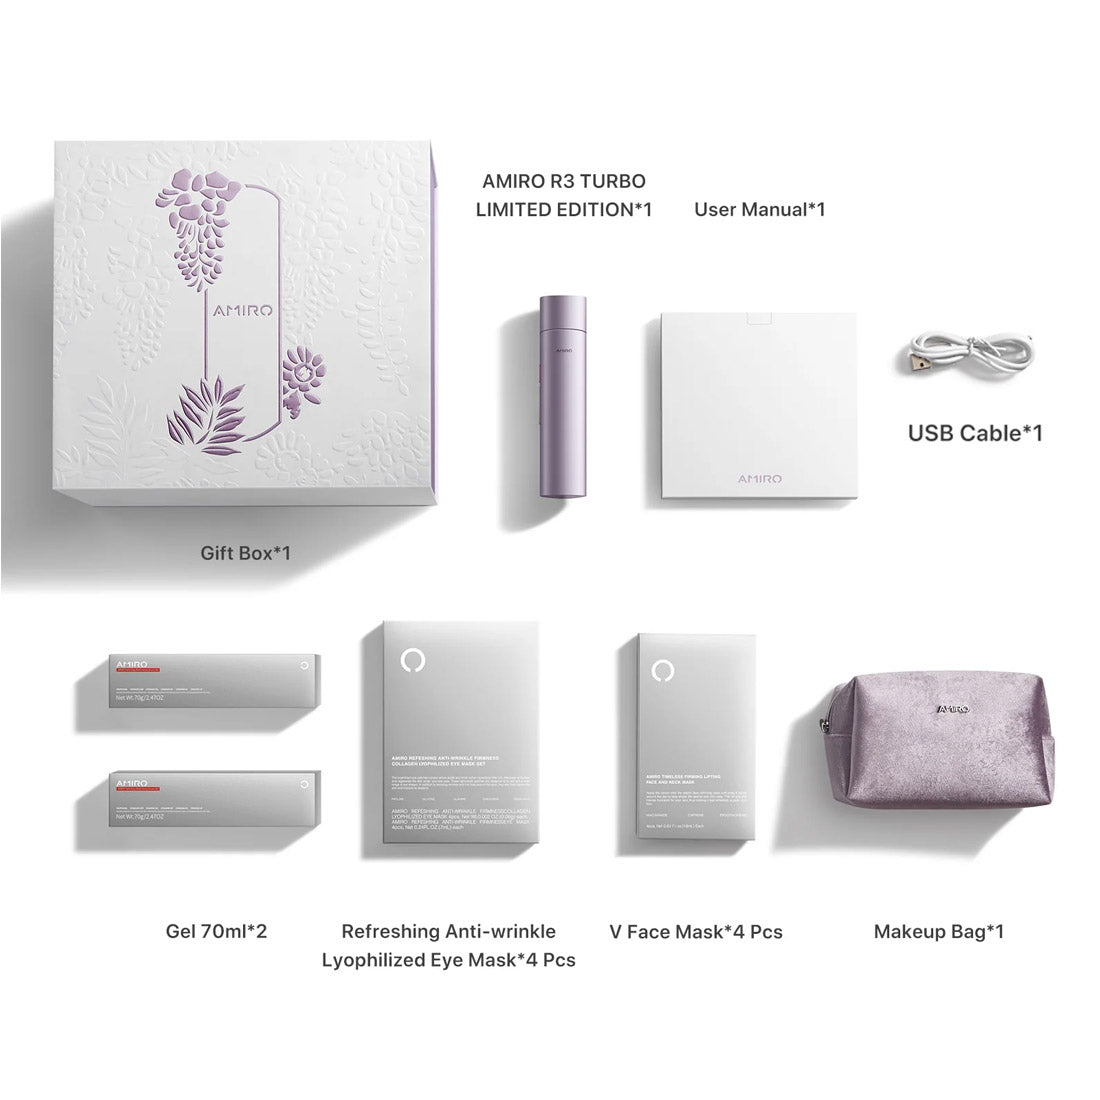 AMIRO R3 Turbo Facial RF Skin Tightening Device - Limited Edition Purple